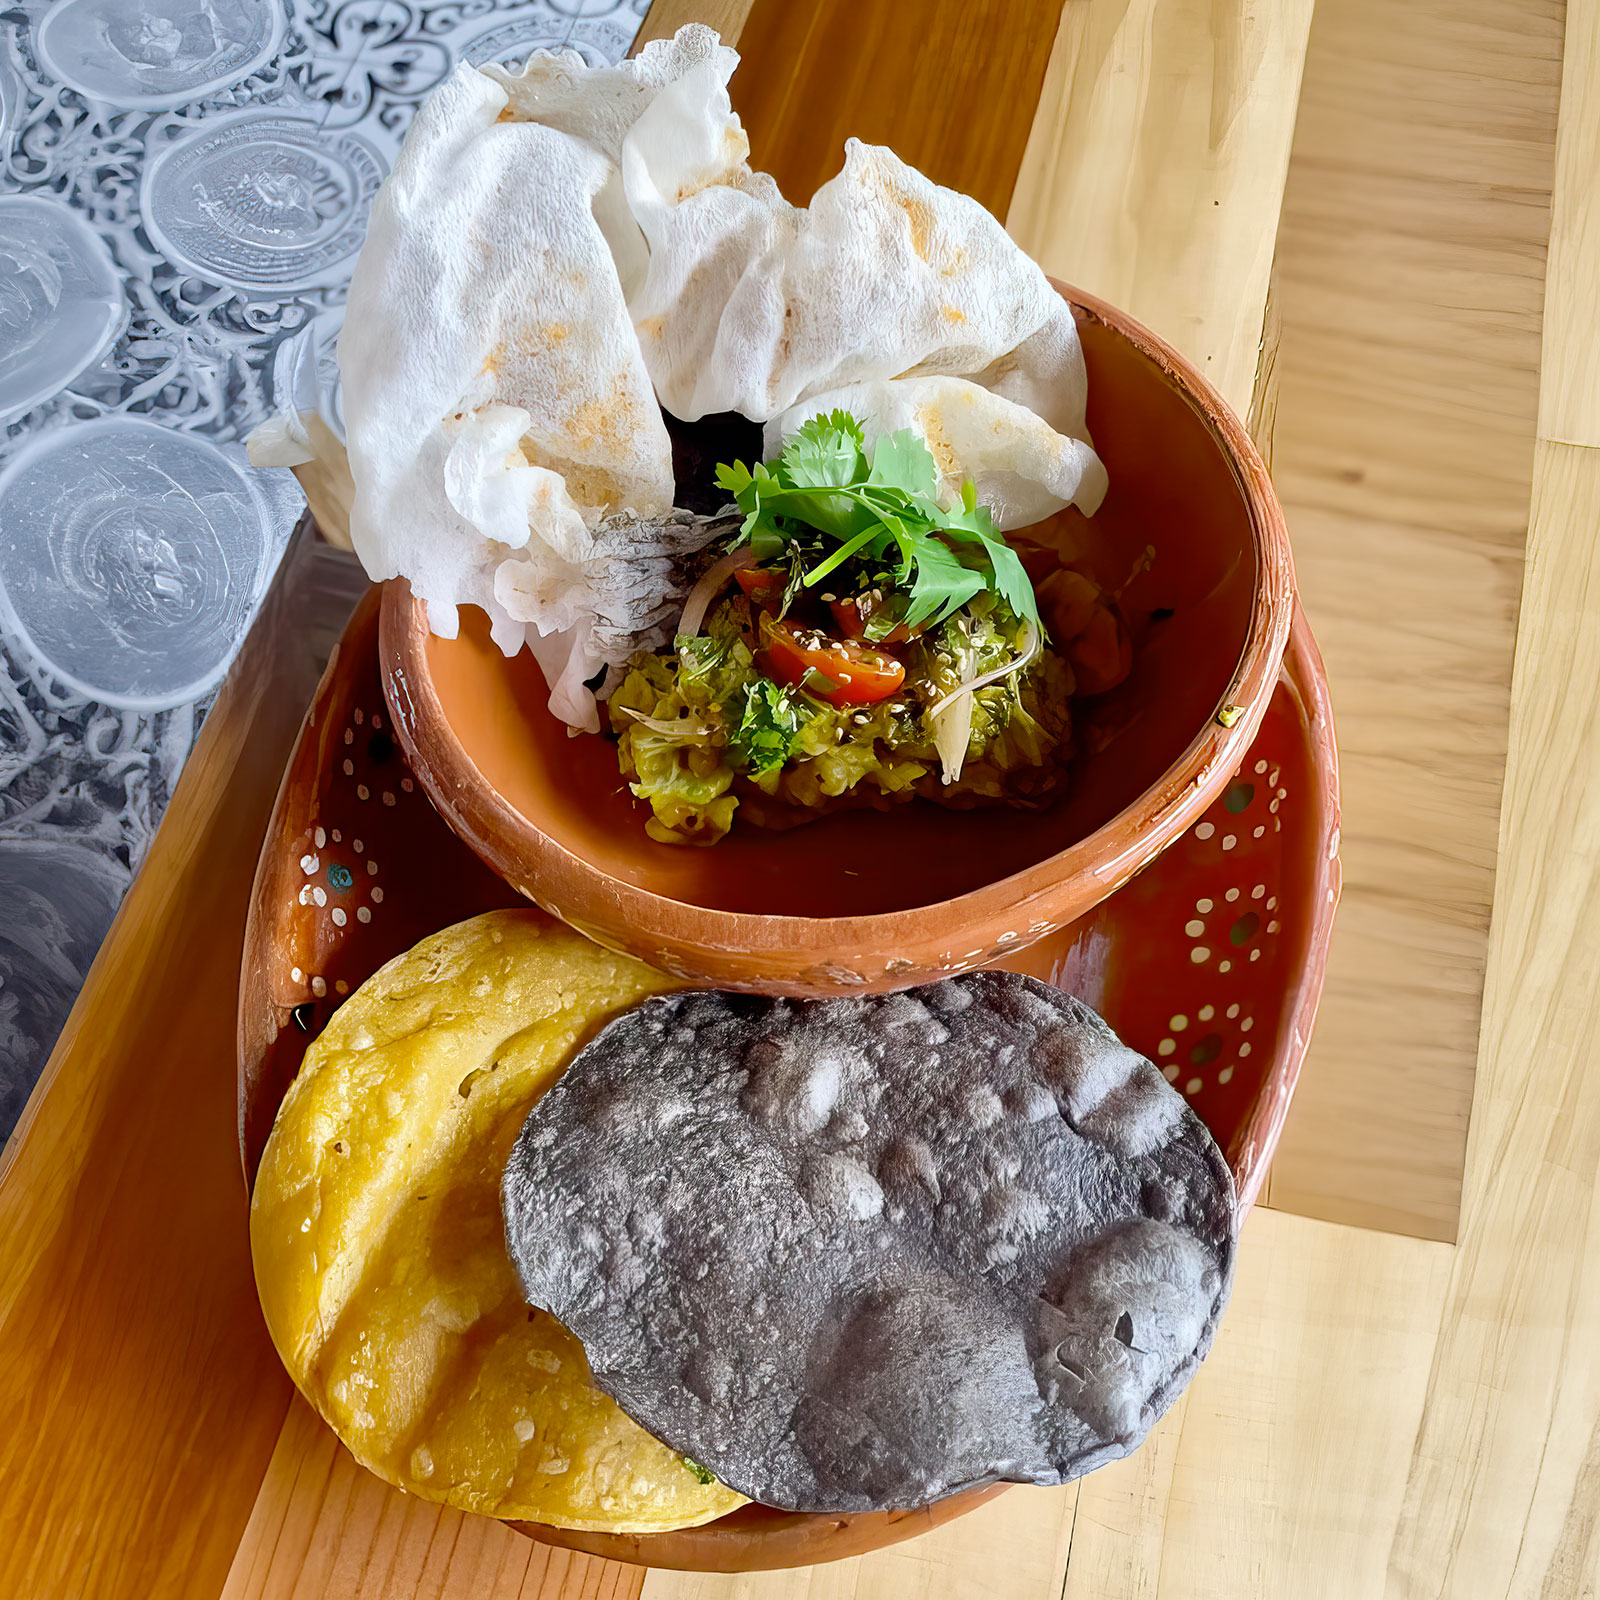 Explore Durango's Rich Mexican Cuisine Heritage Unveiled